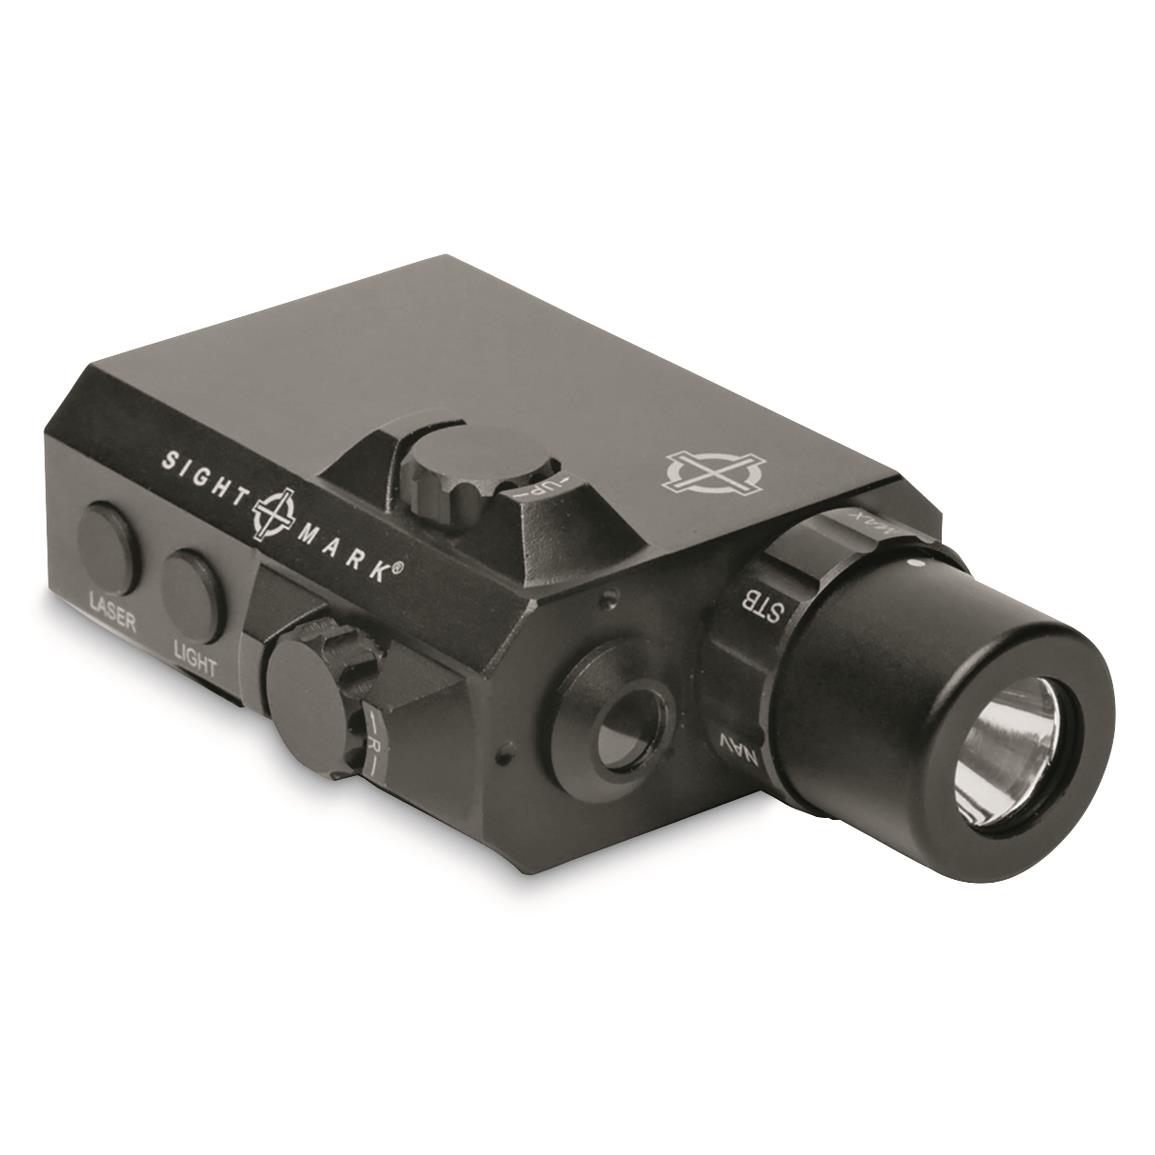 Sightmark LoPro Mini Combo, Green Laser/LED Light